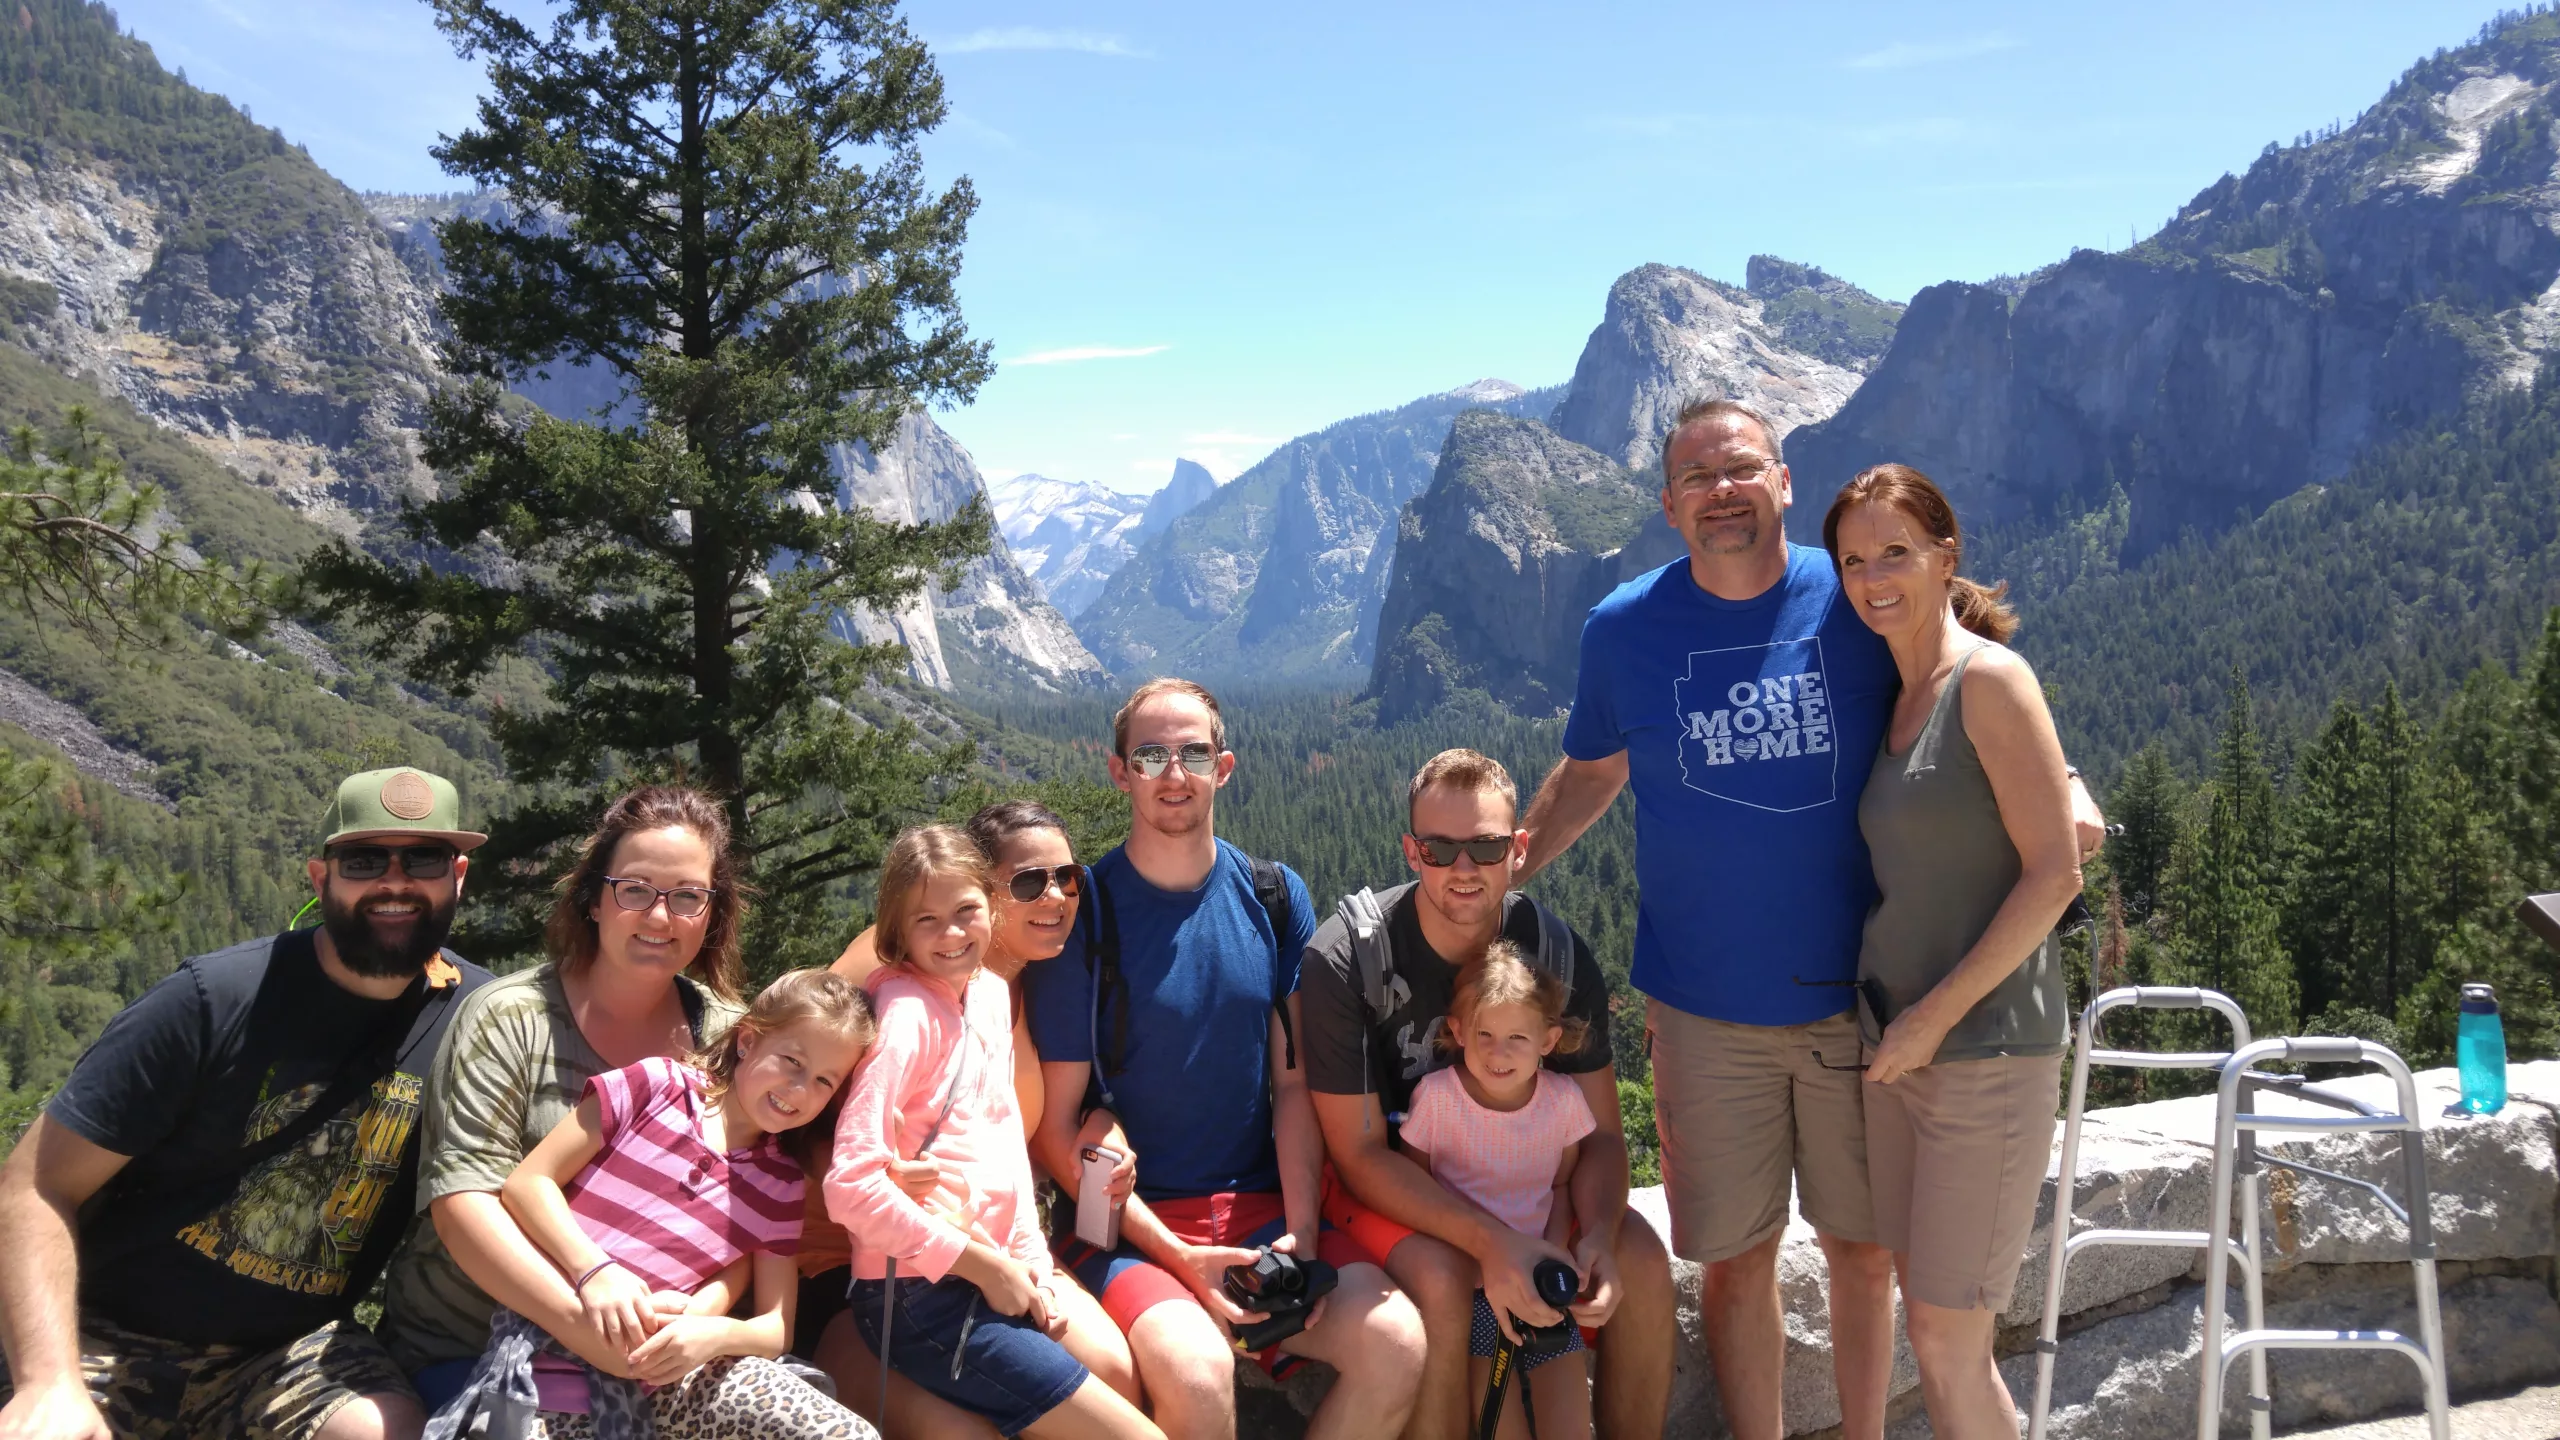 What a beautiful family and a beautiful place, Yosemite NP